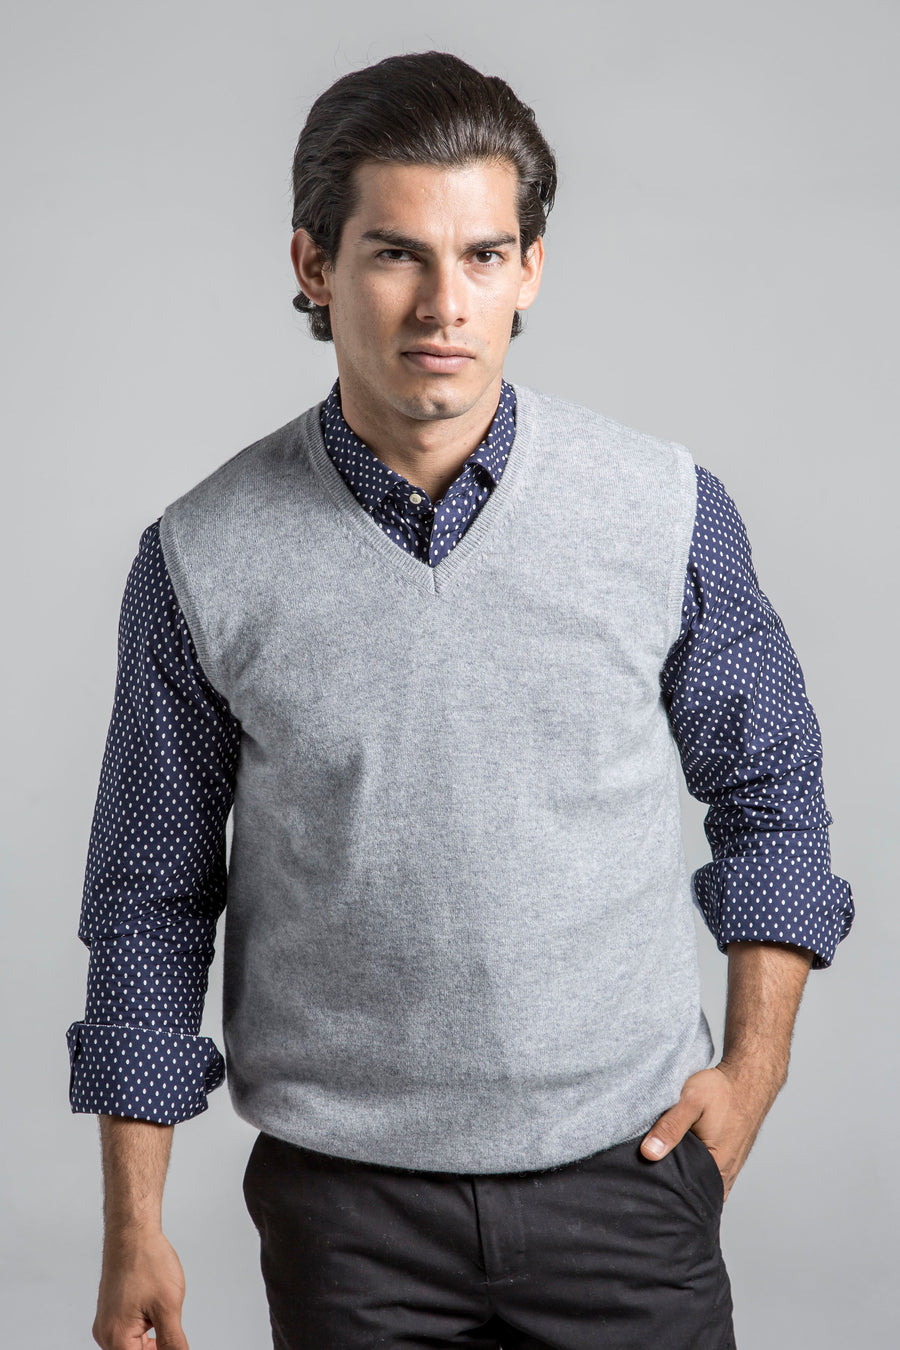 pine cashmere mens classic 100% pure cashmere v-neck sweater vest in grey